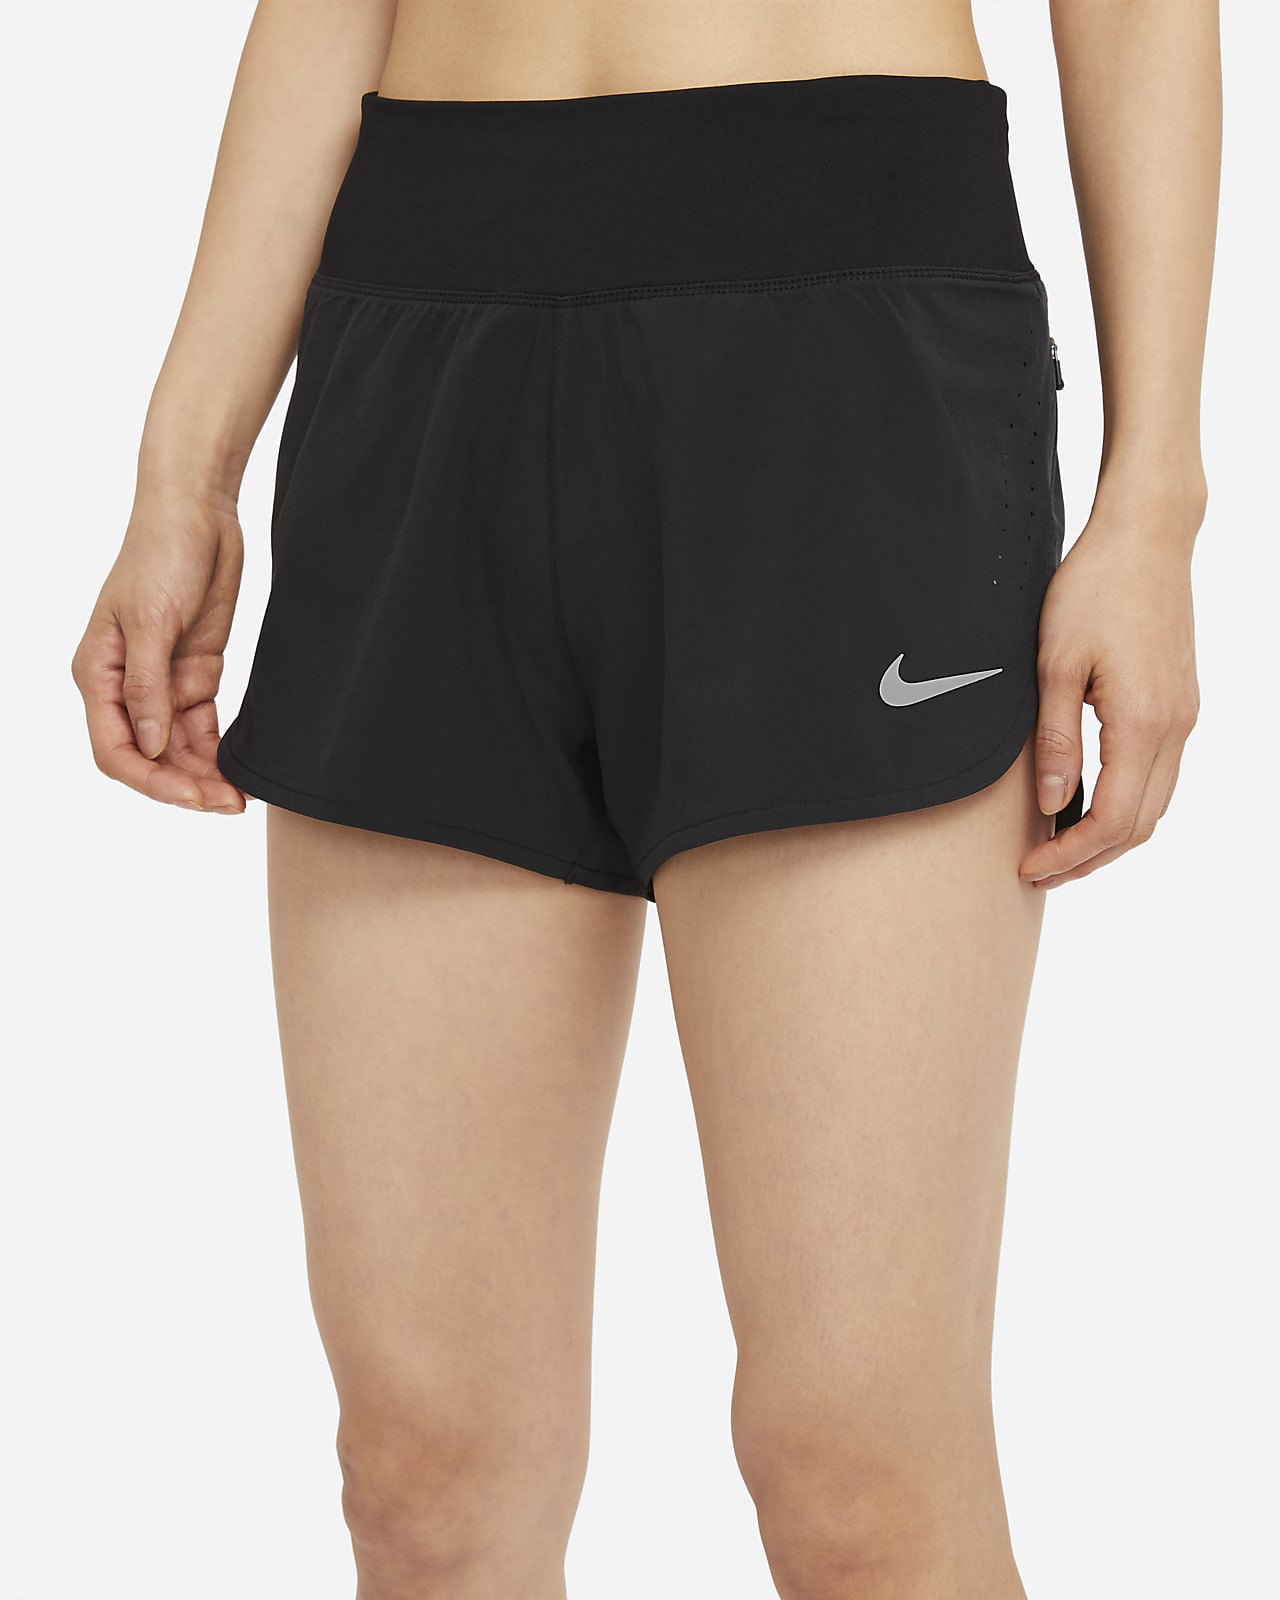 nike eclipse women's running shorts